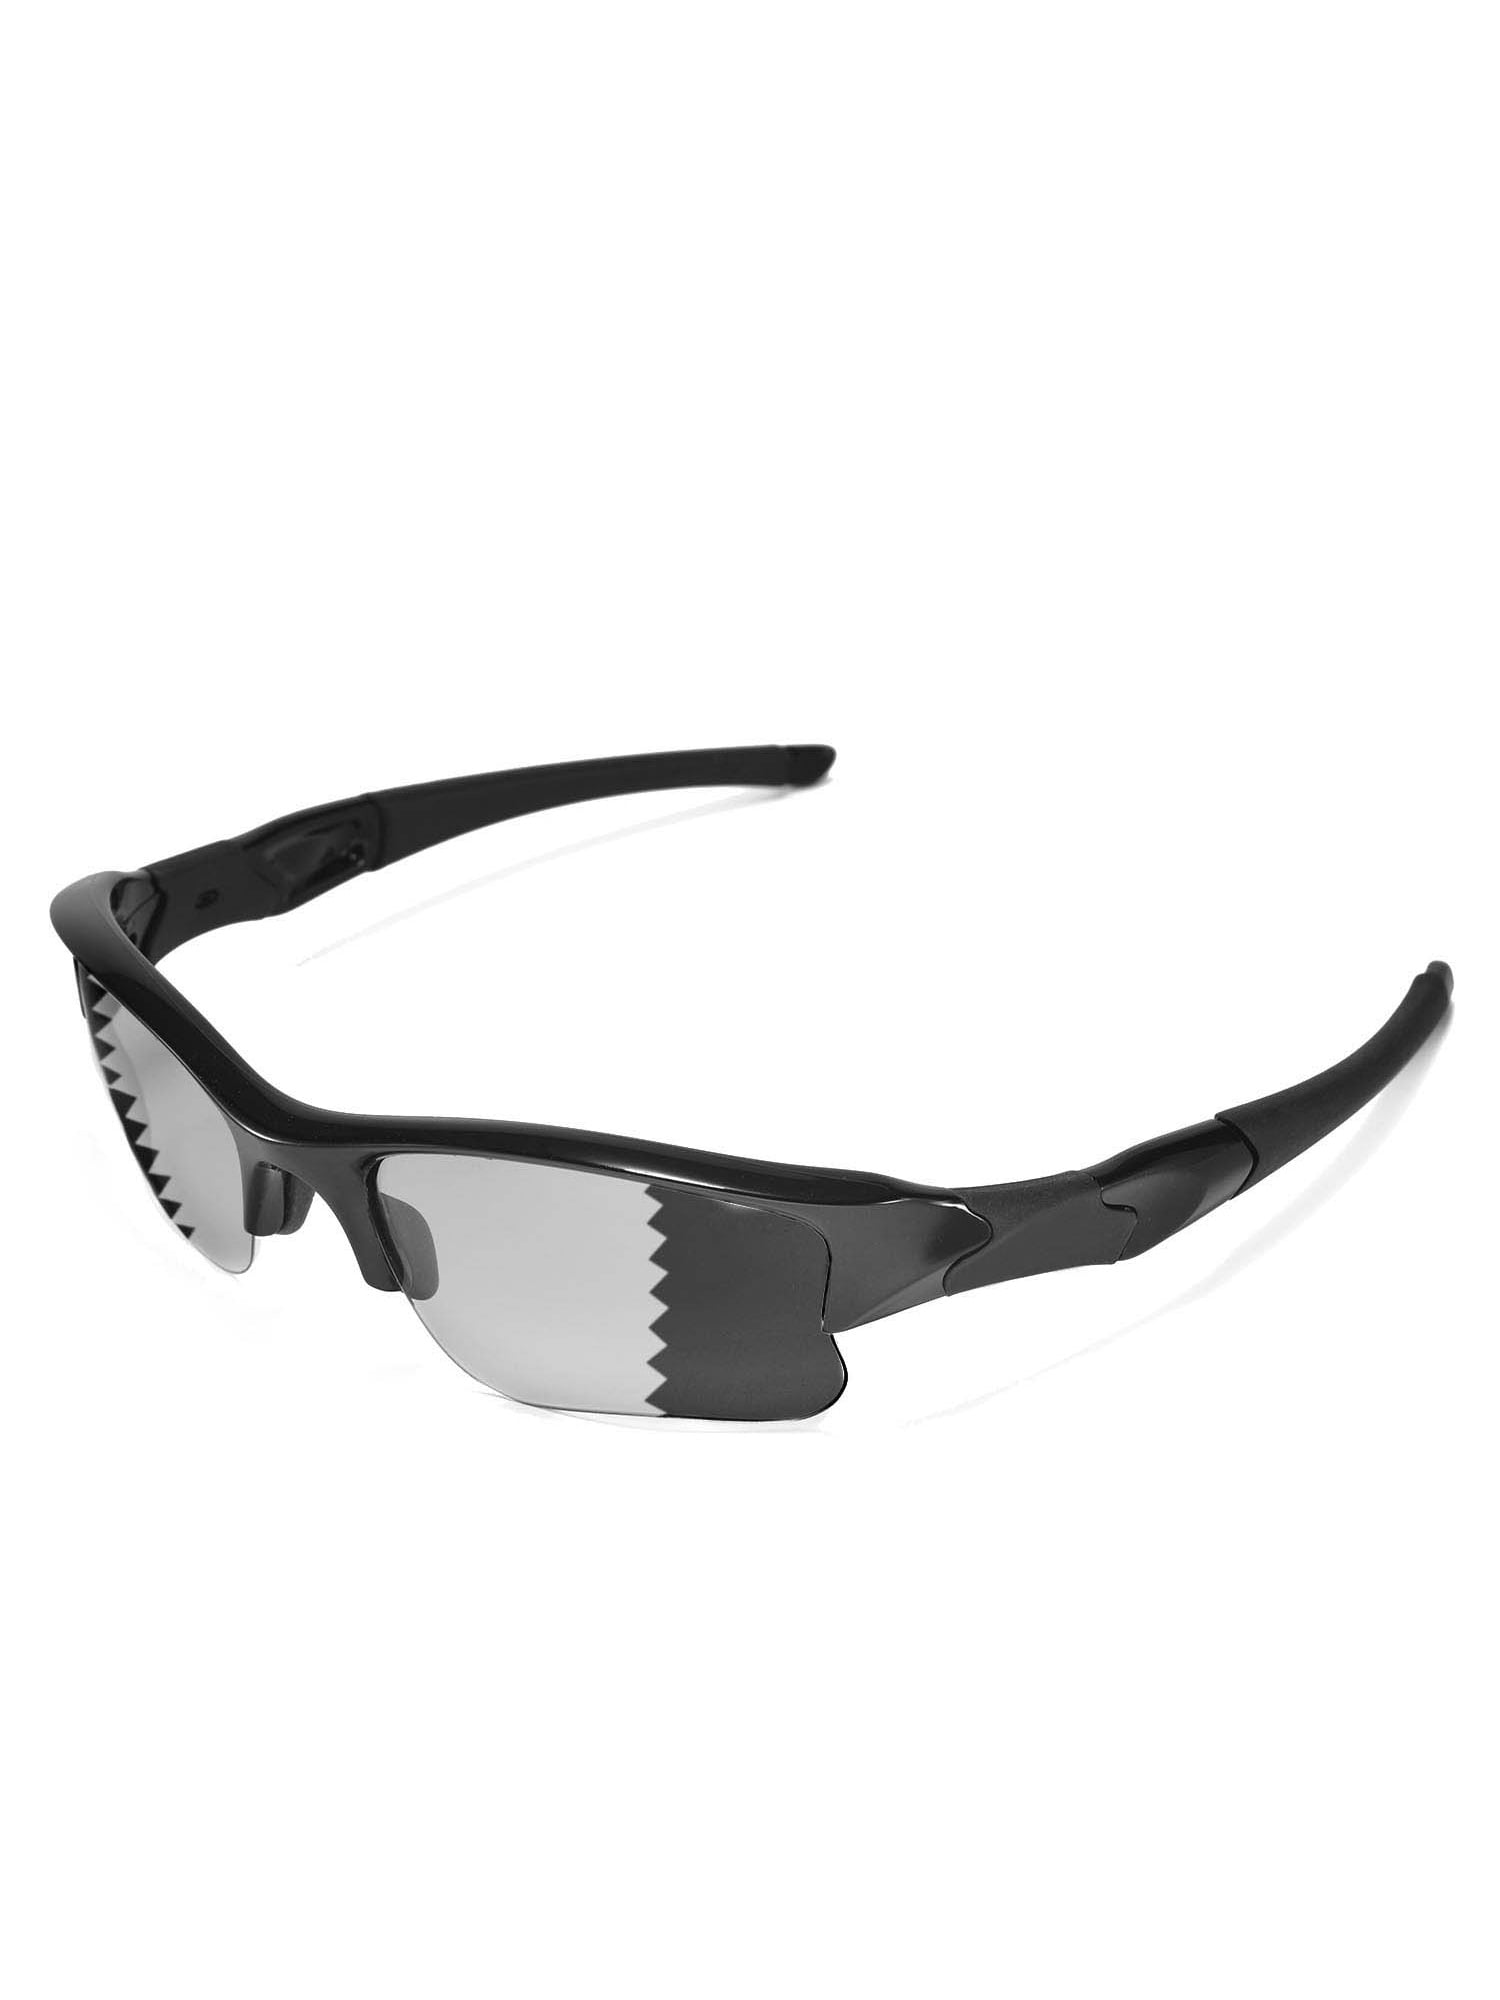 Walleva Polarized Replacement for Oakley Flak Jacket XLJ Sunglasses - Walmart.com